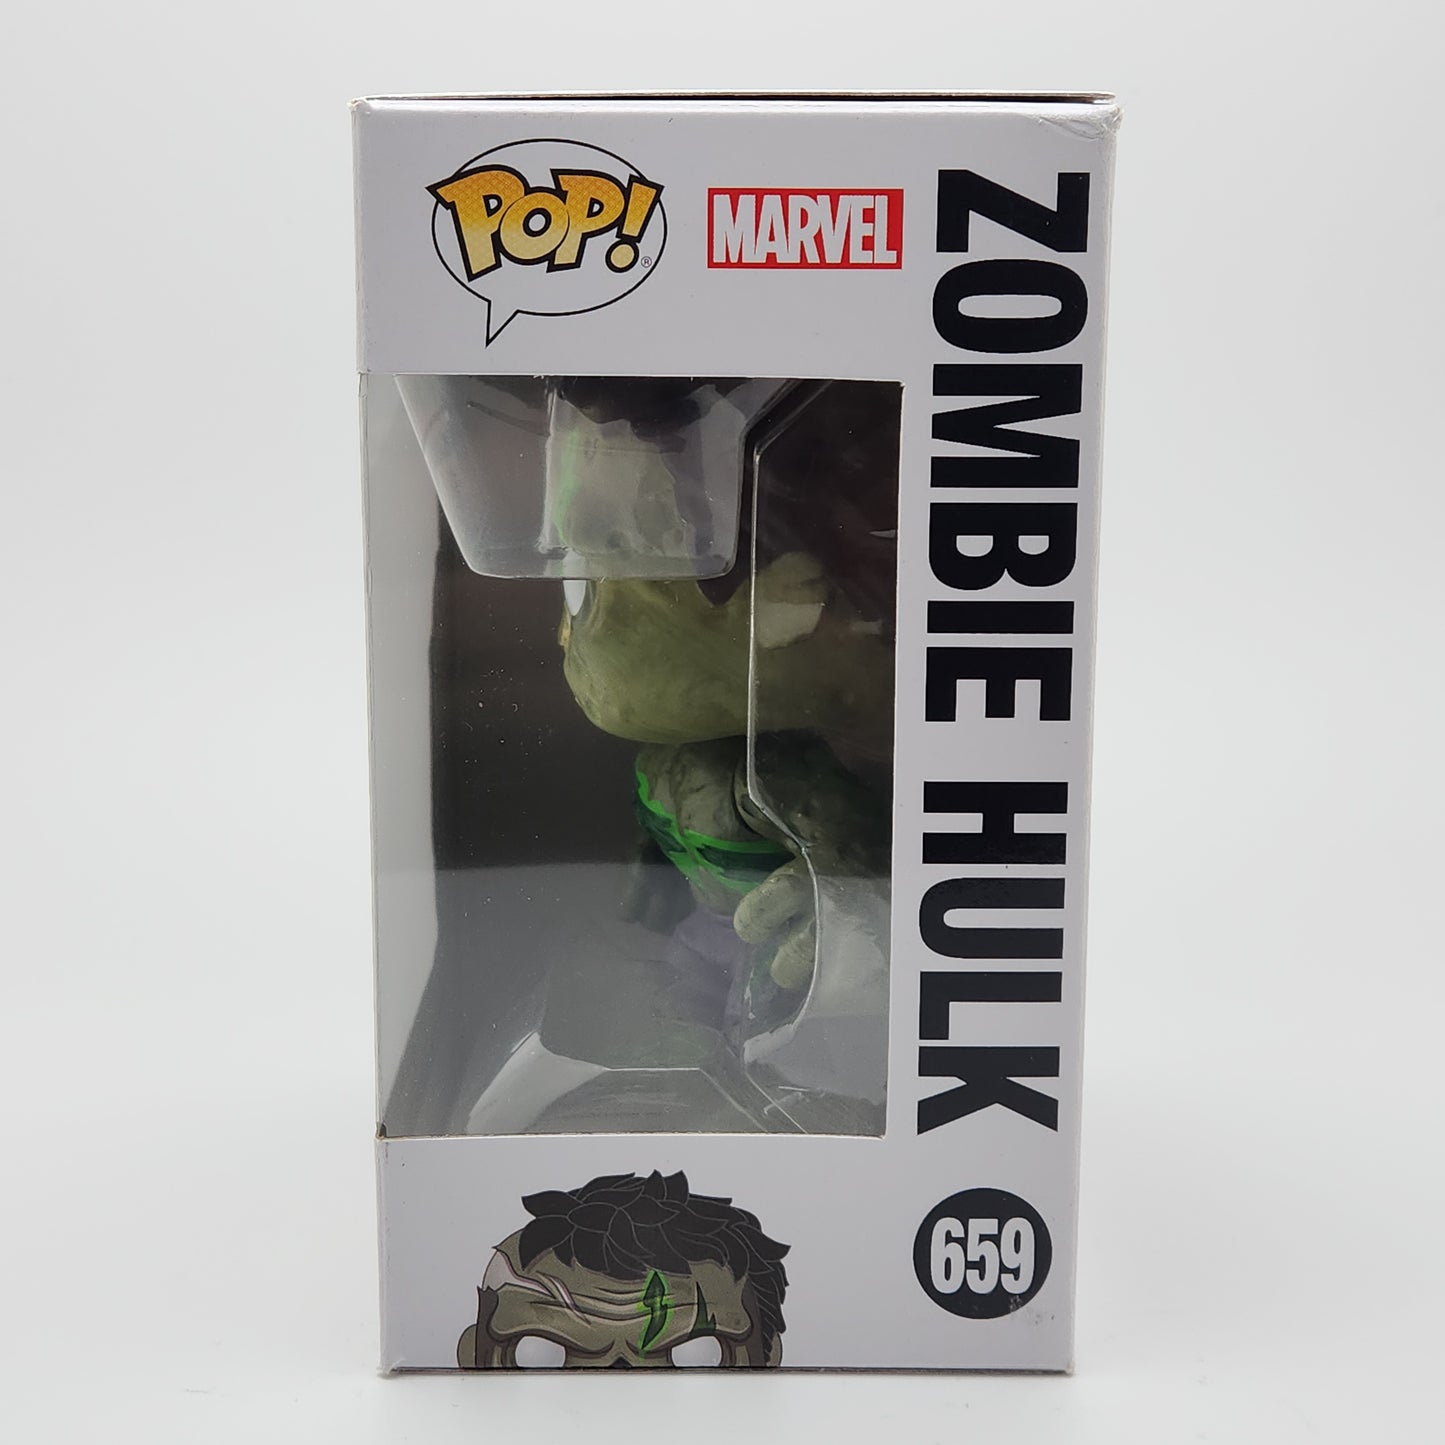 Funko Pop! Marvel Zombies- Zombie Hulk